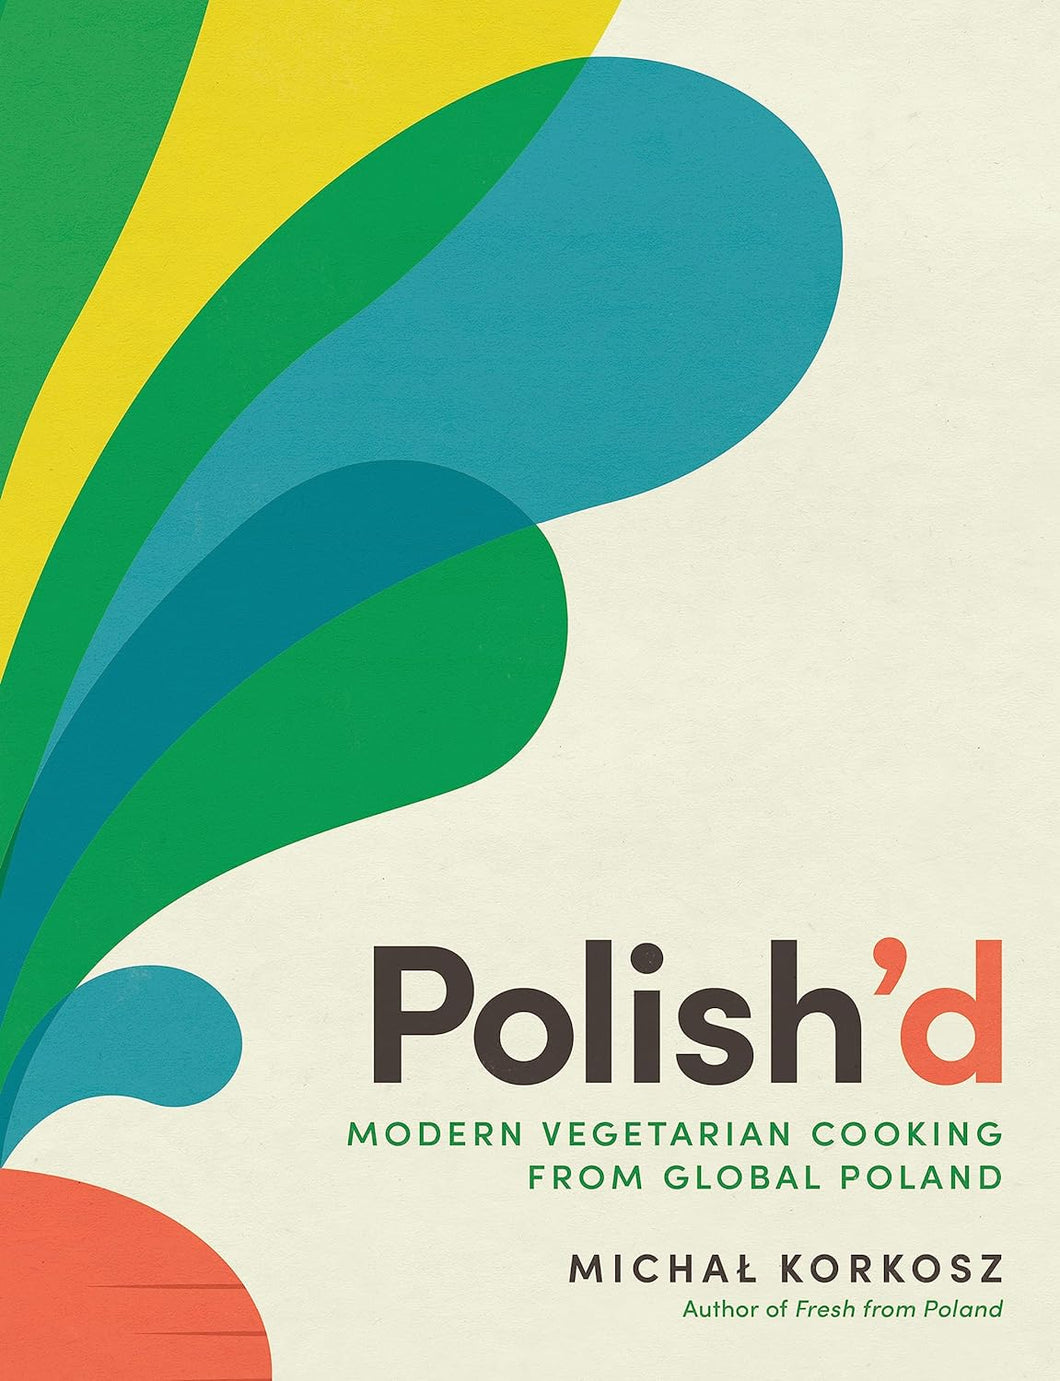 Polish’d: Modern Vegetarian Cooking from Global Poland by Michal Korkosz